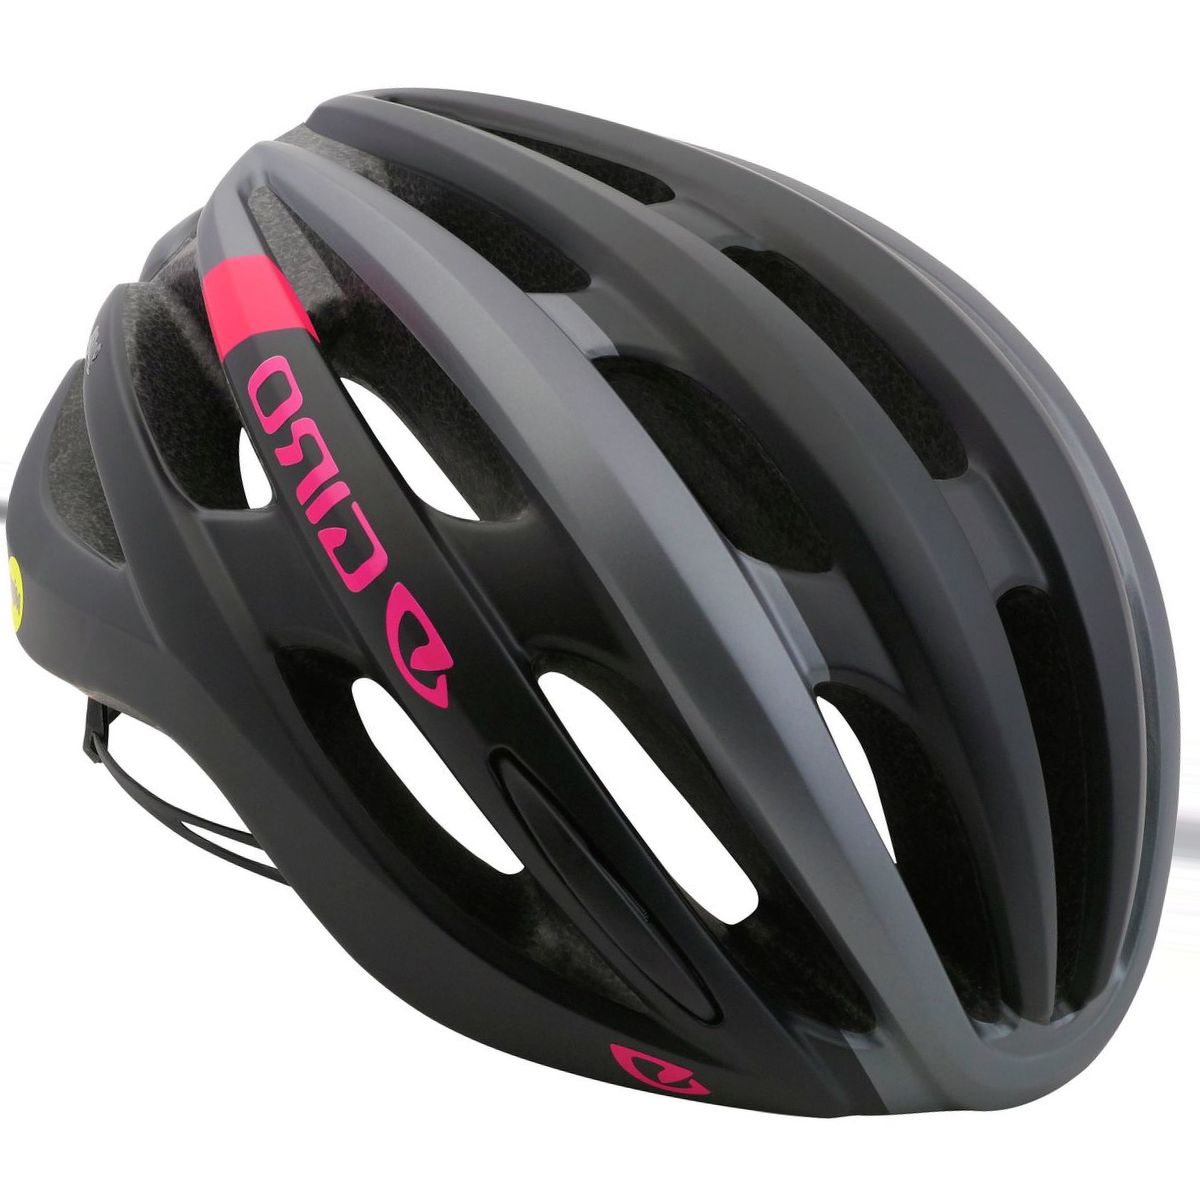 Giro Saga MIPS Helmet - Women's